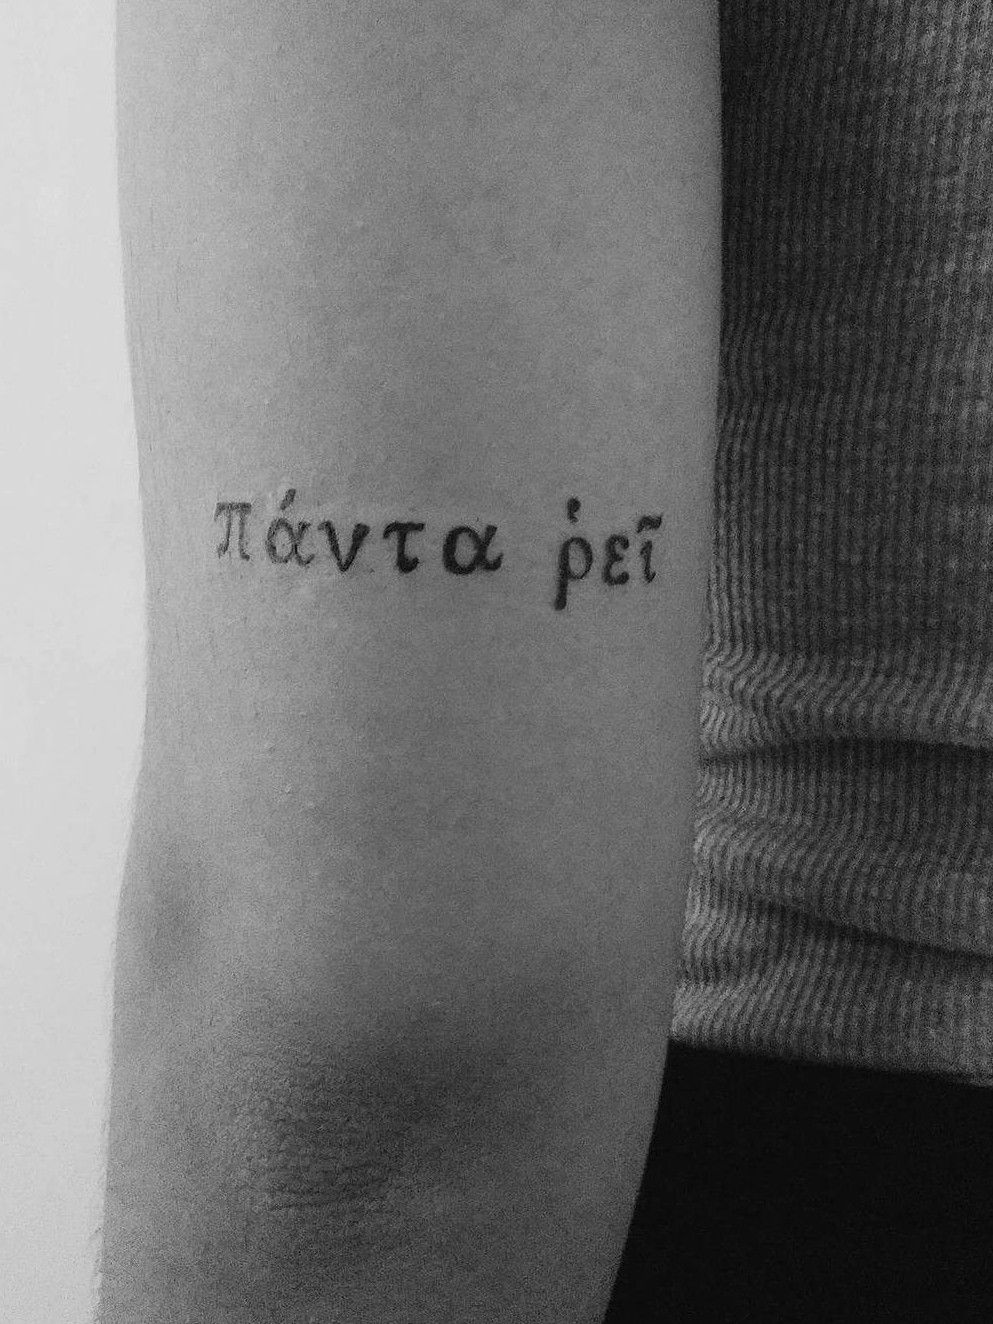 Tattoo Ideas Greek Words and Phrases  Phrase tattoos Beautiful greek  words Tattoo quotes